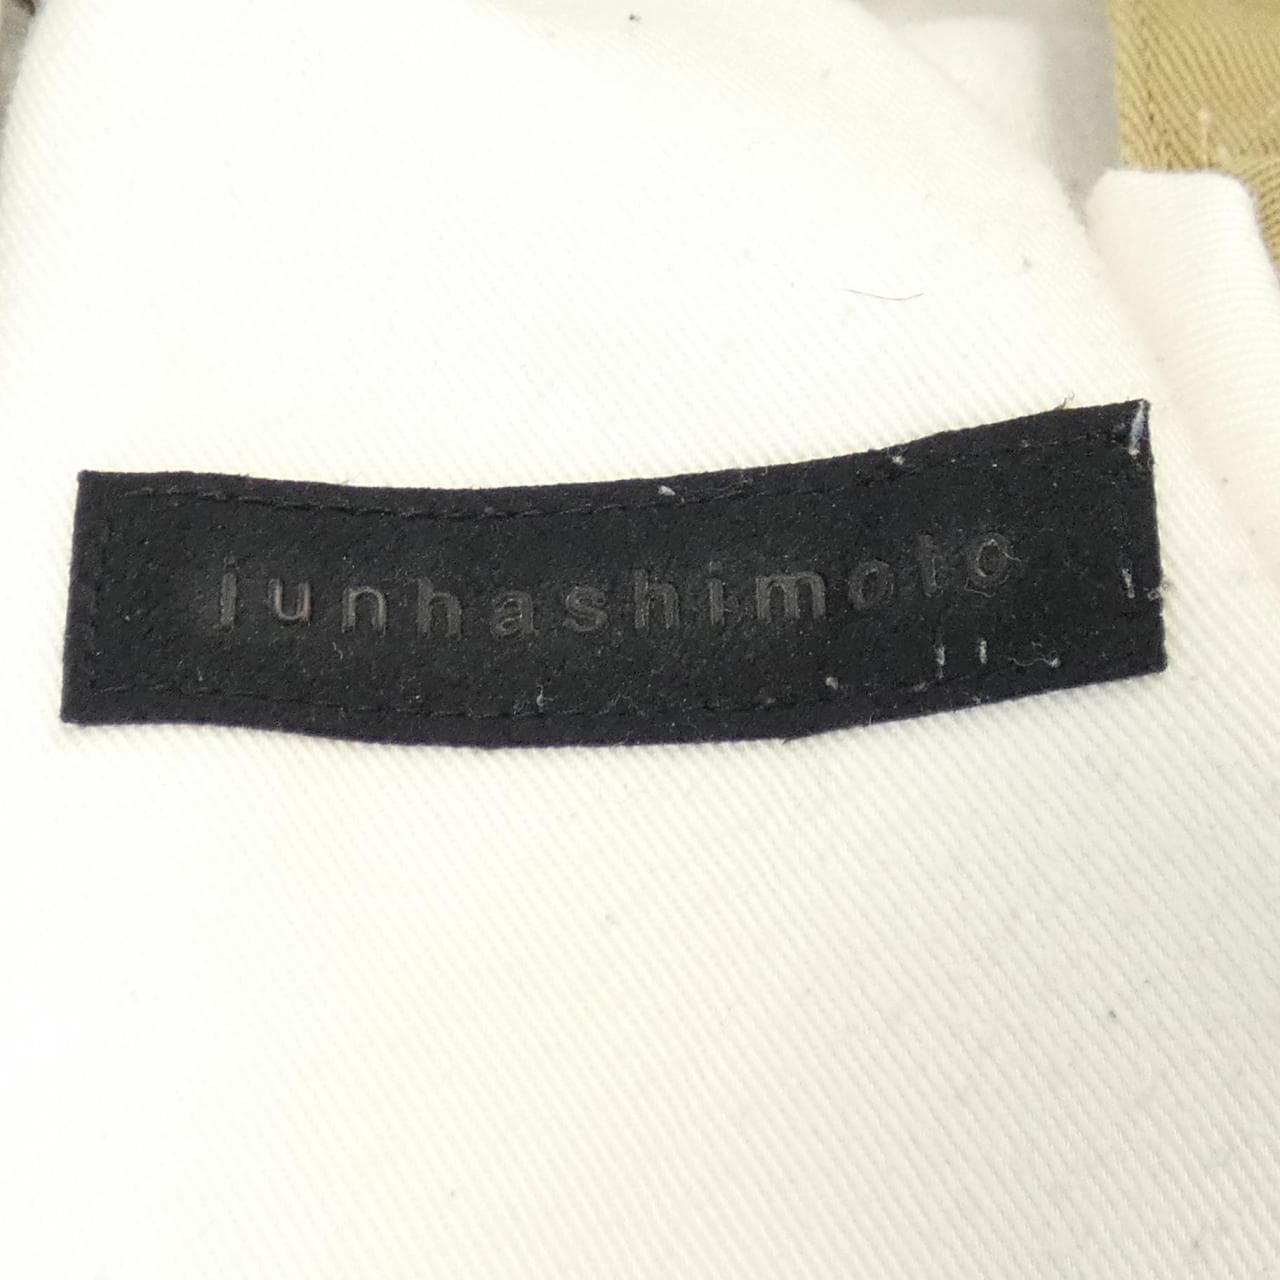 Jun Hashimoto JUN HASHIMOTO pants